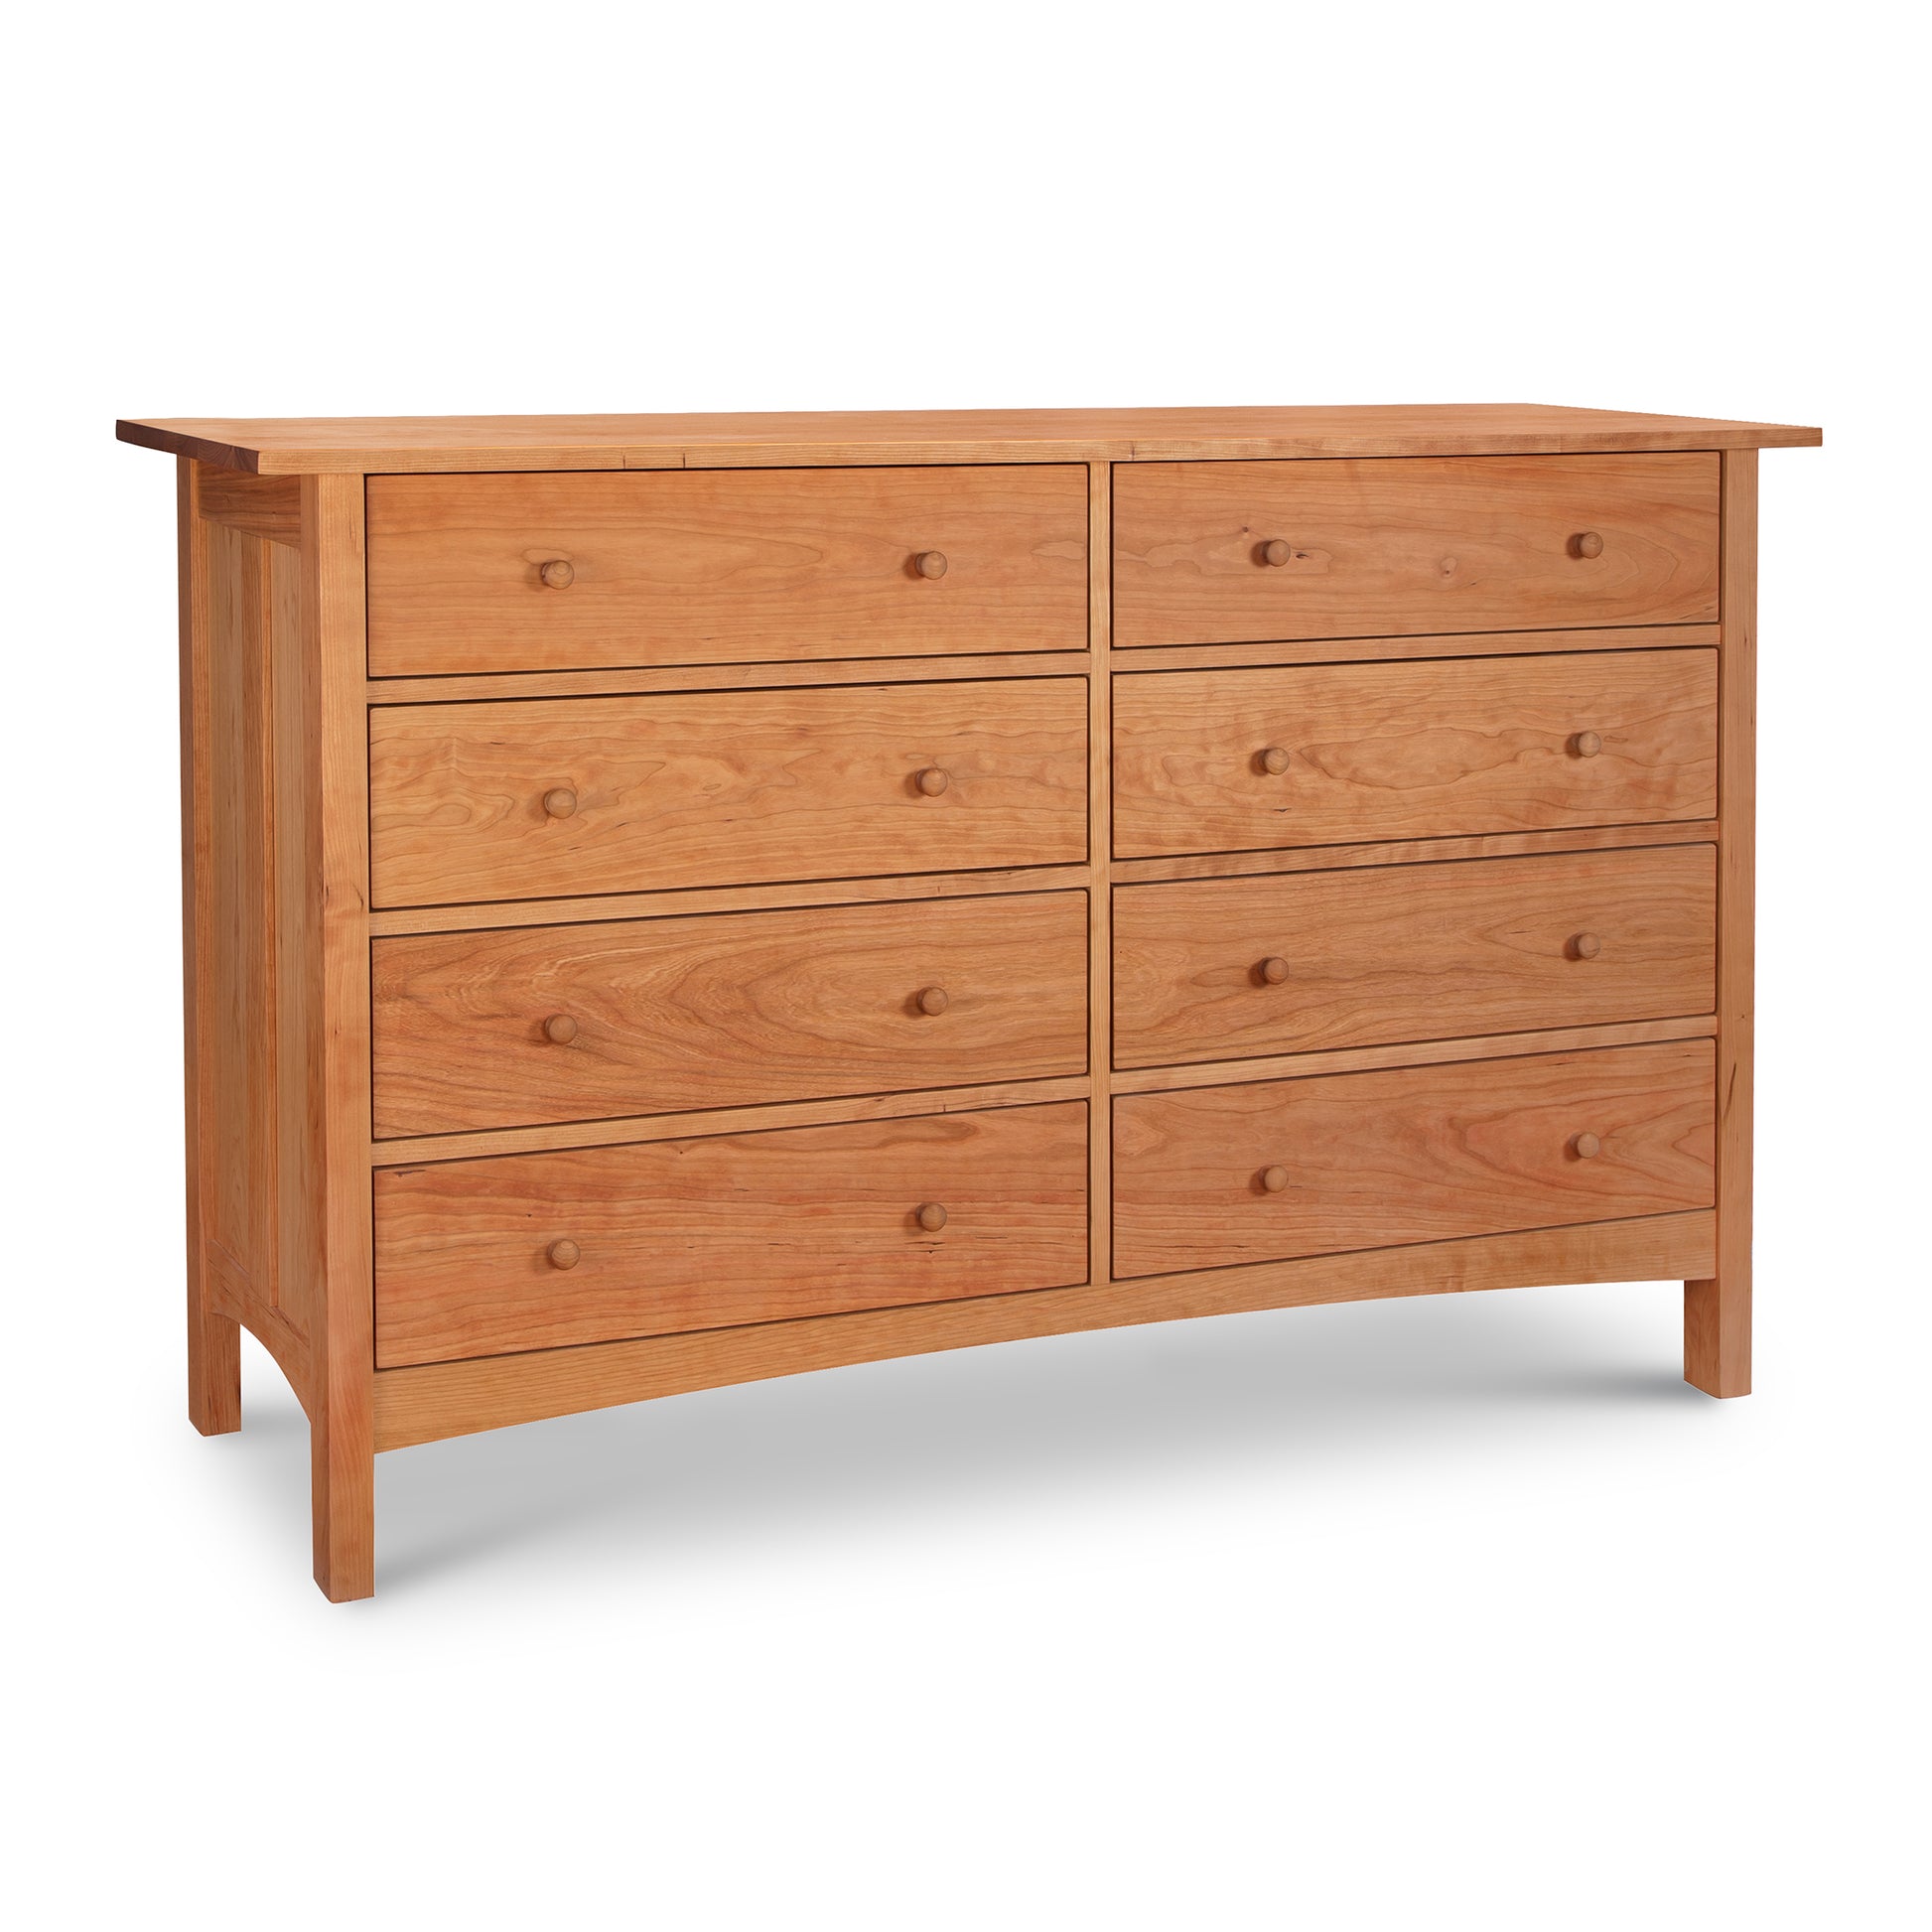 An image of a Vermont Furniture Designs Burlington Shaker 8-Drawer Dresser #1, featuring a Shaker style design.